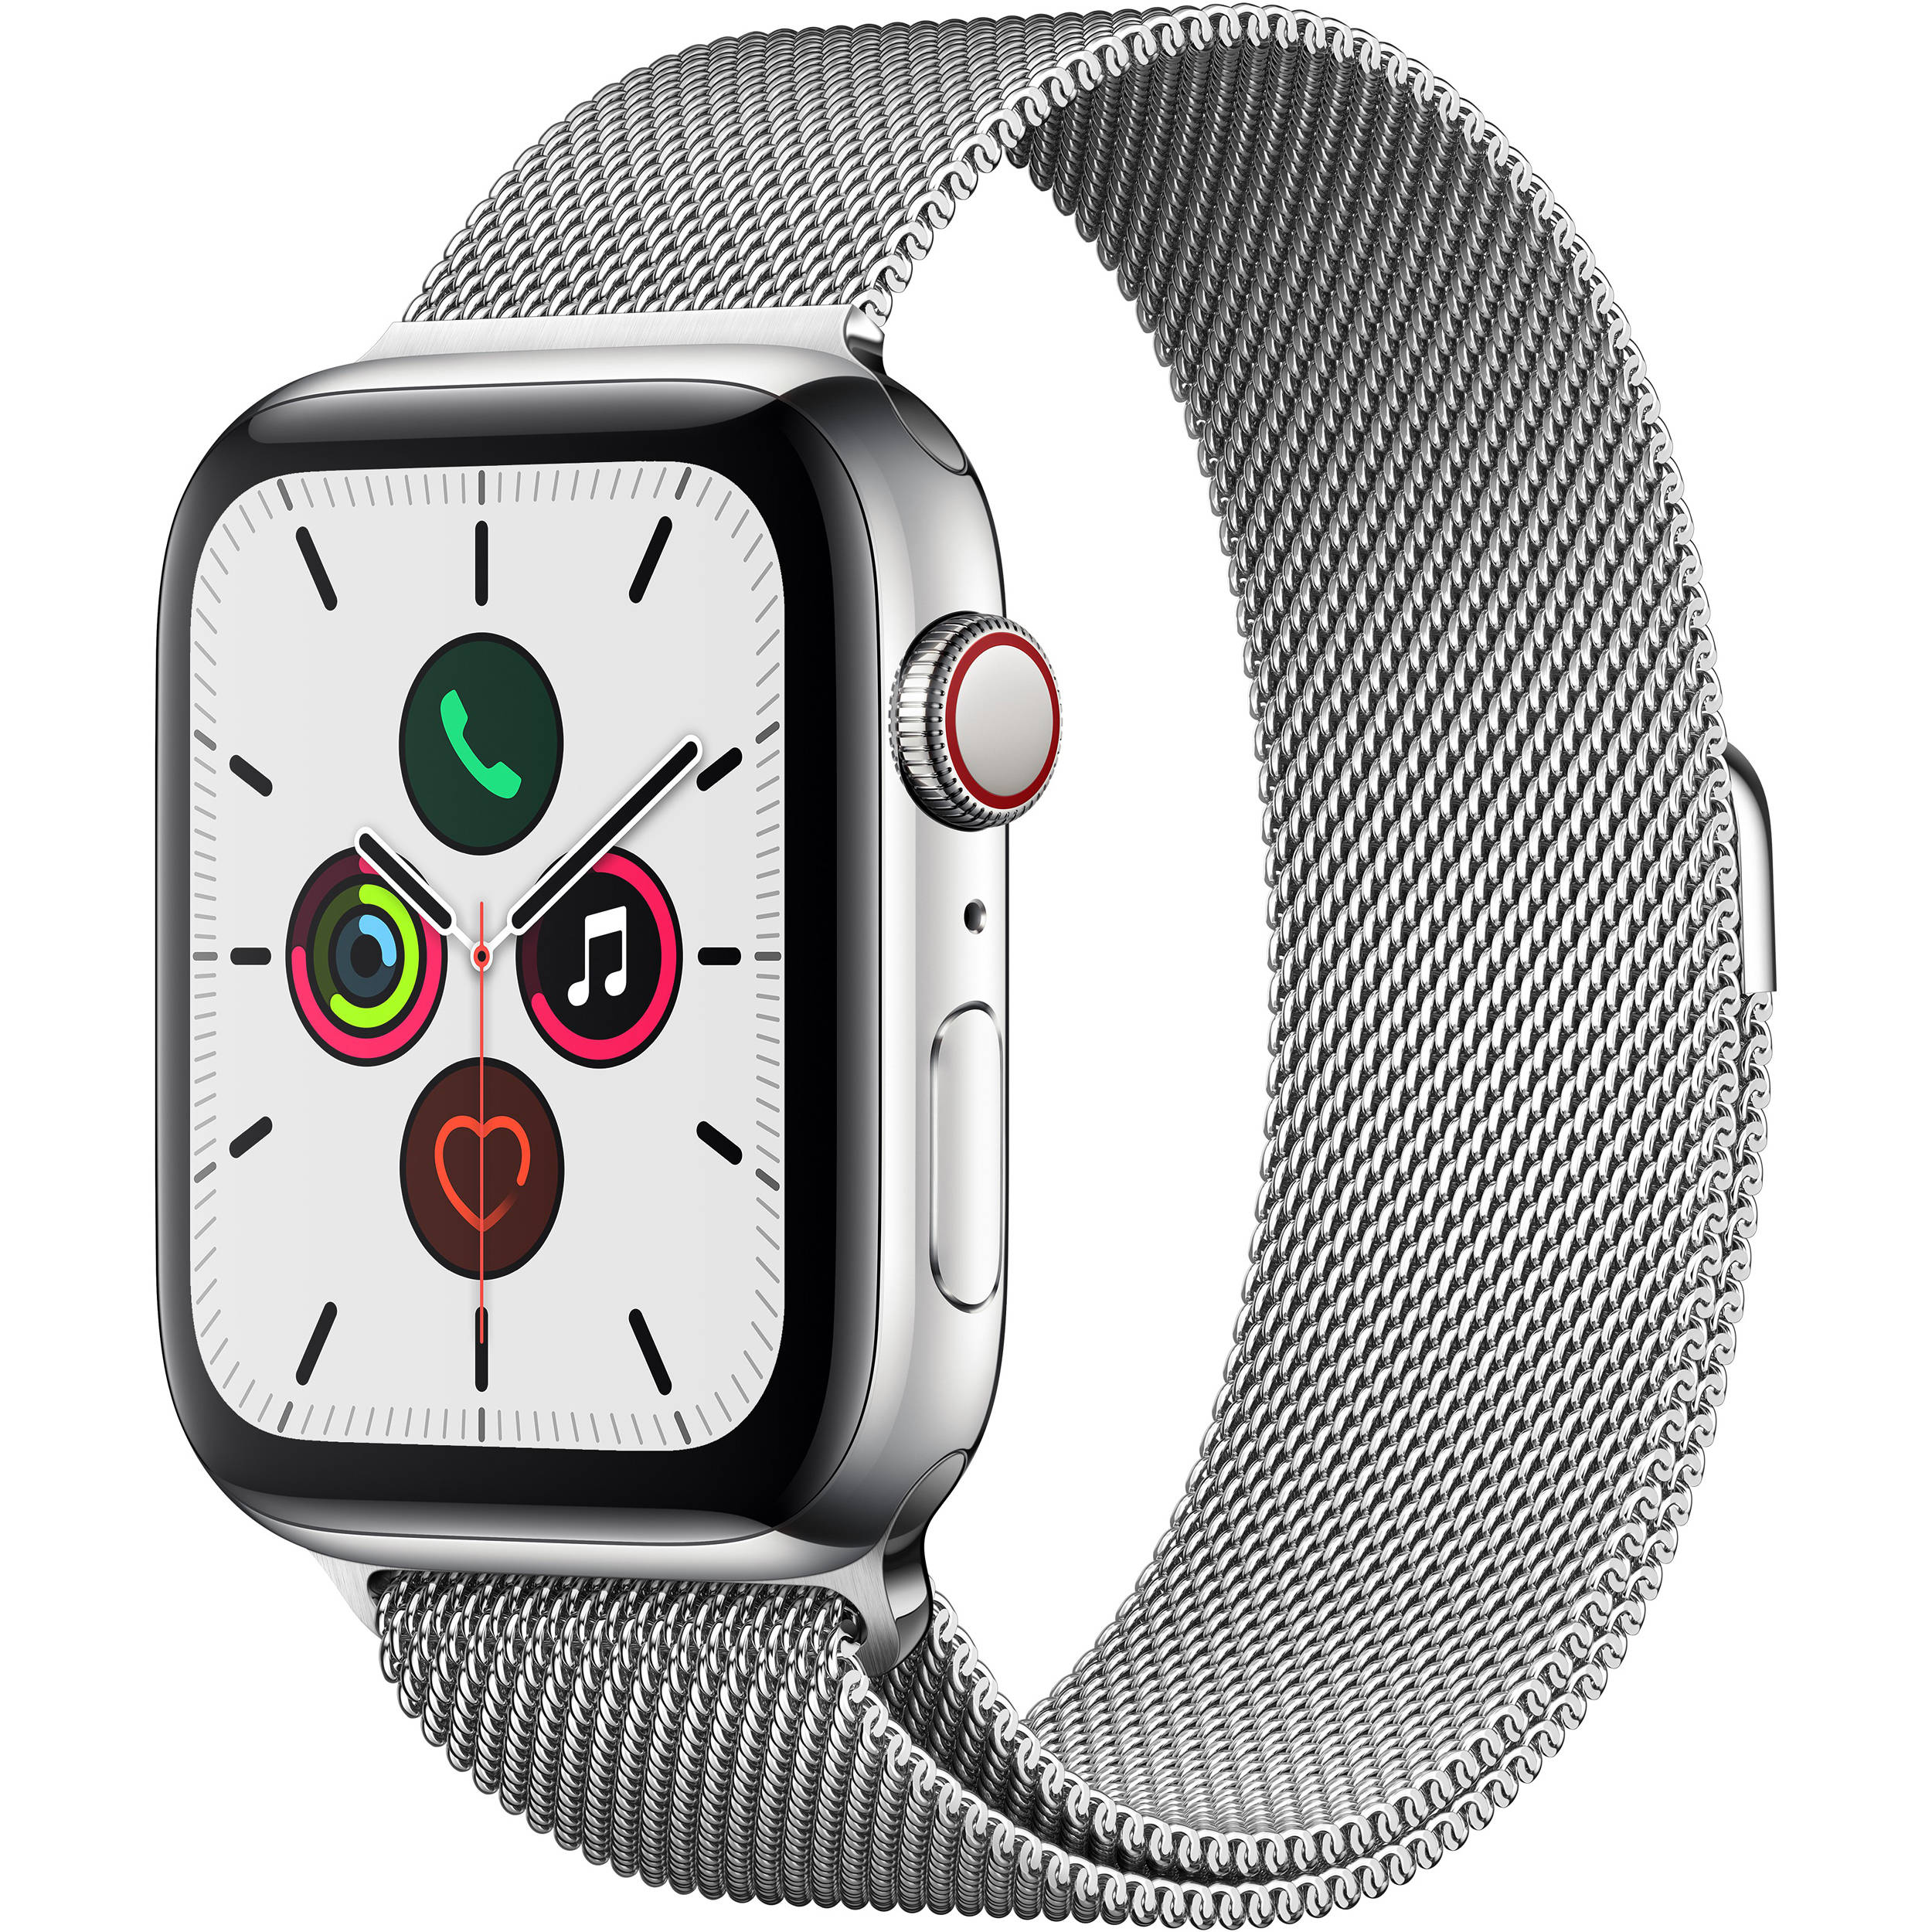 Apple Watch Series 5 Silver Stainless Steel